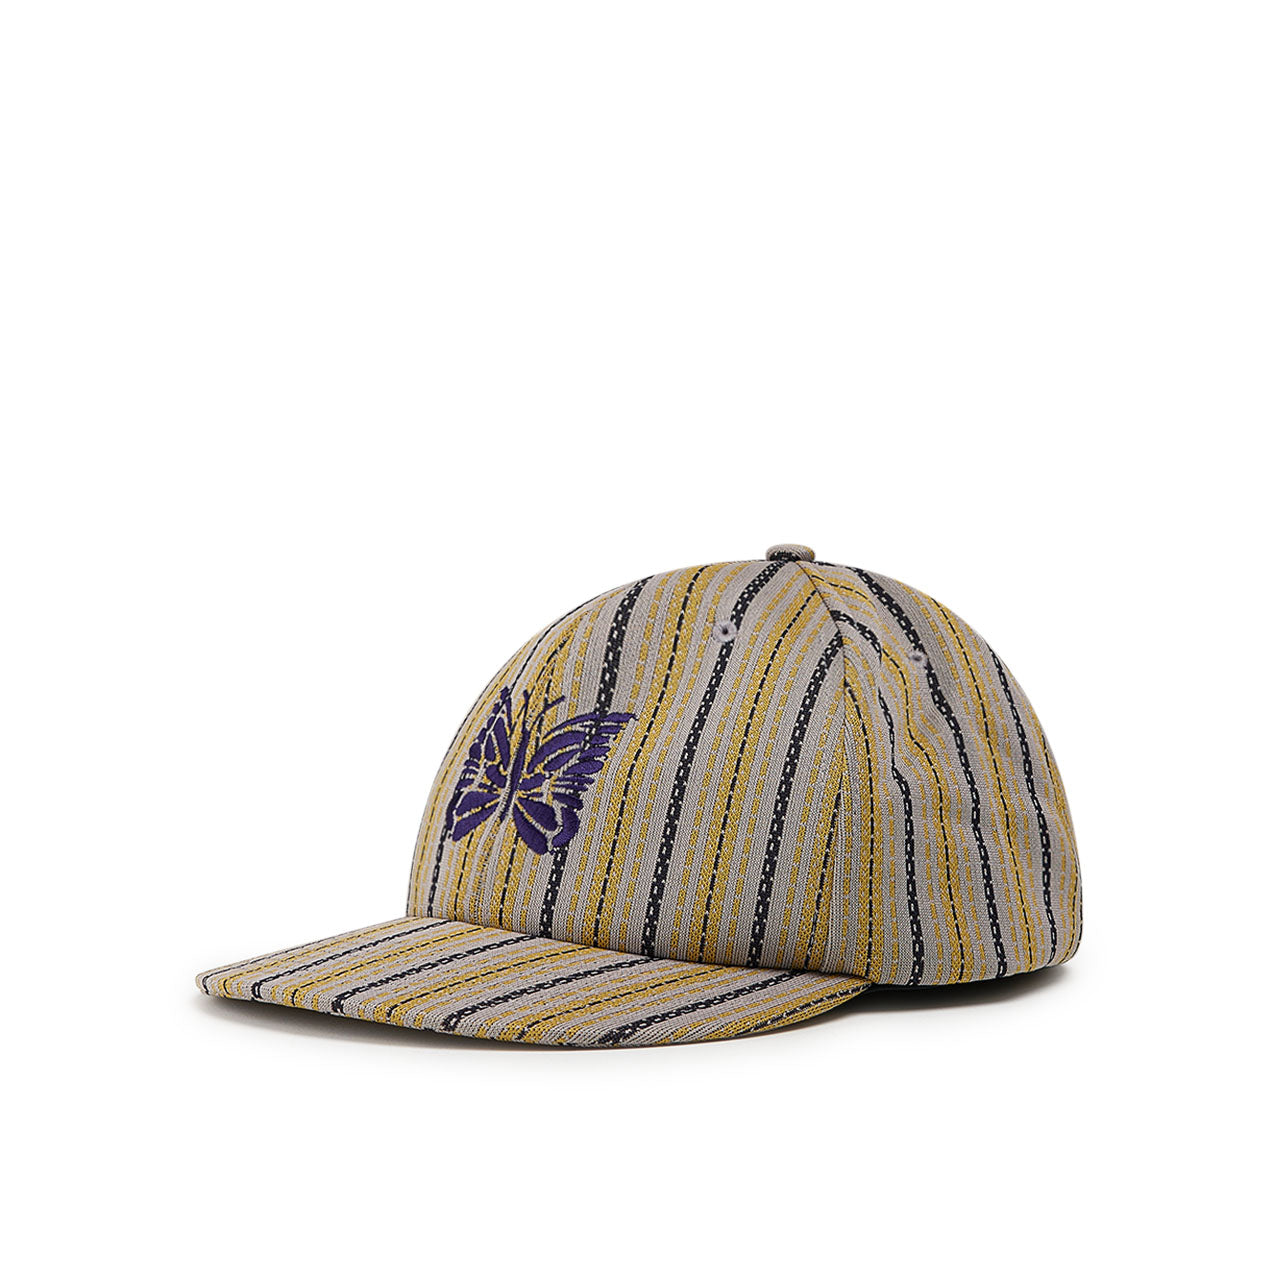 needles baseball cap (yellow / grey)